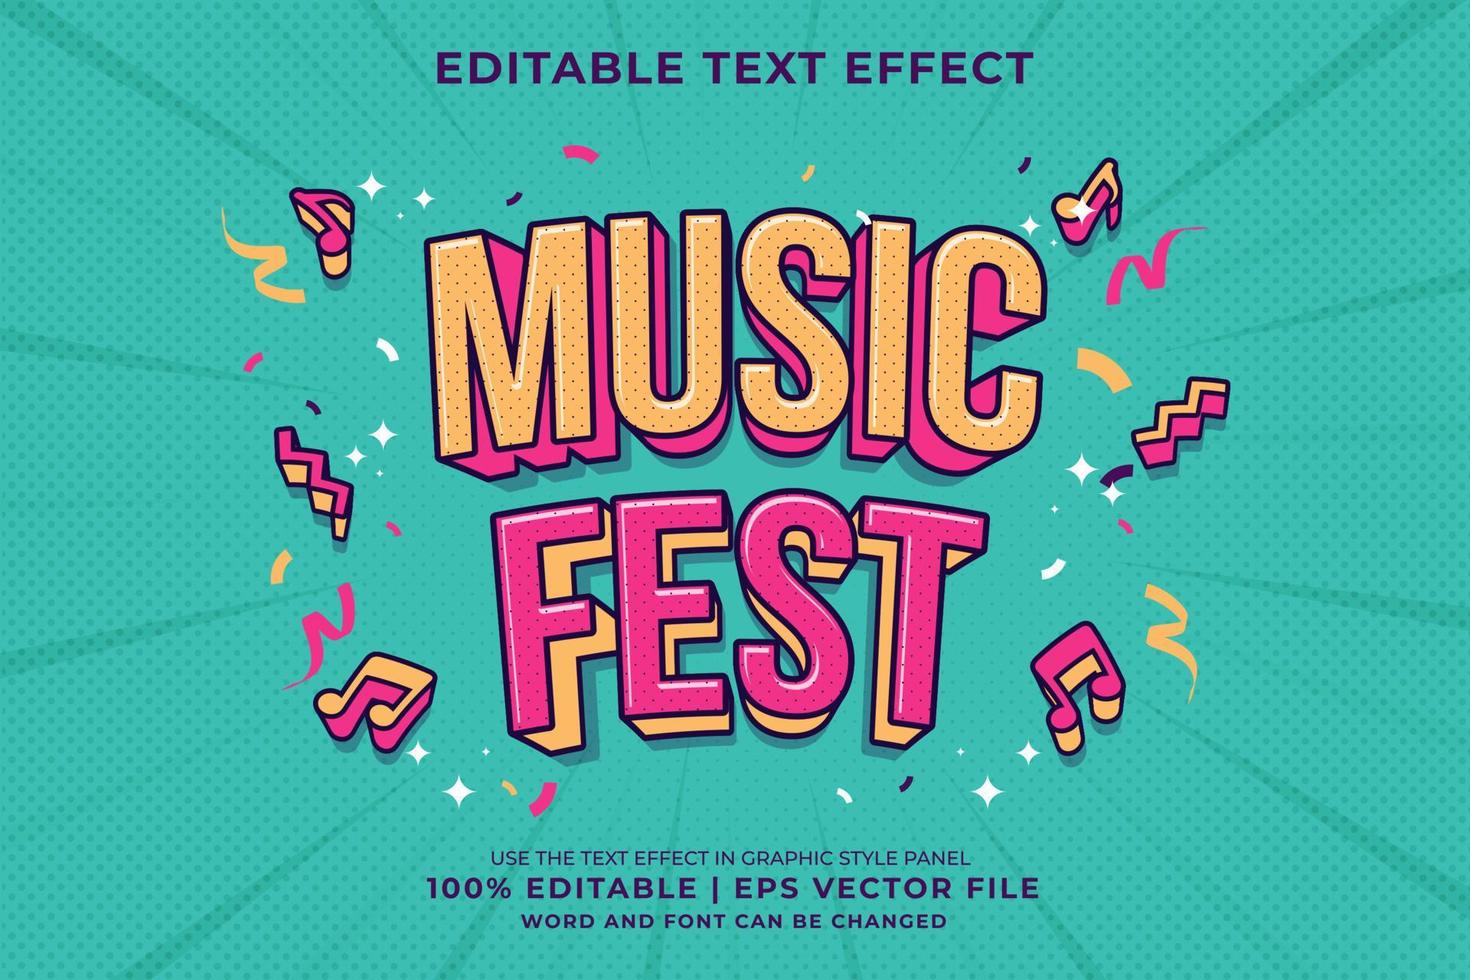 redigerbar text effekt - musik fest tecknad serie mall stil premie vektor